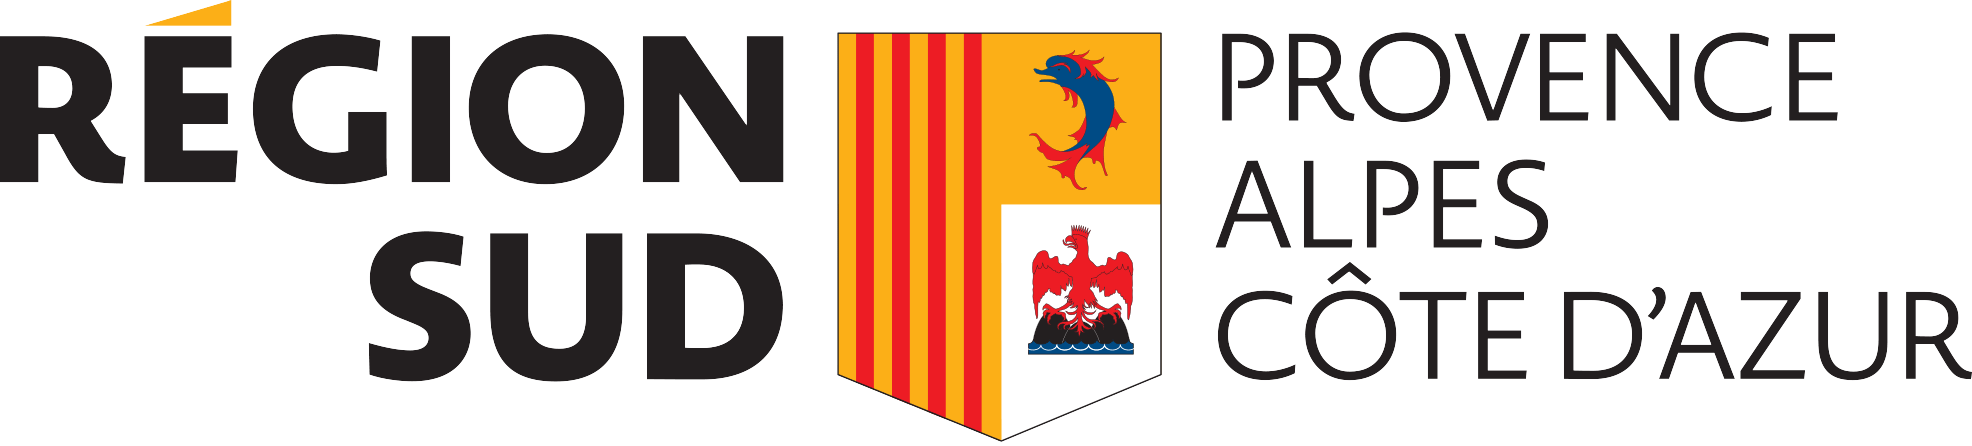 Logo région sud